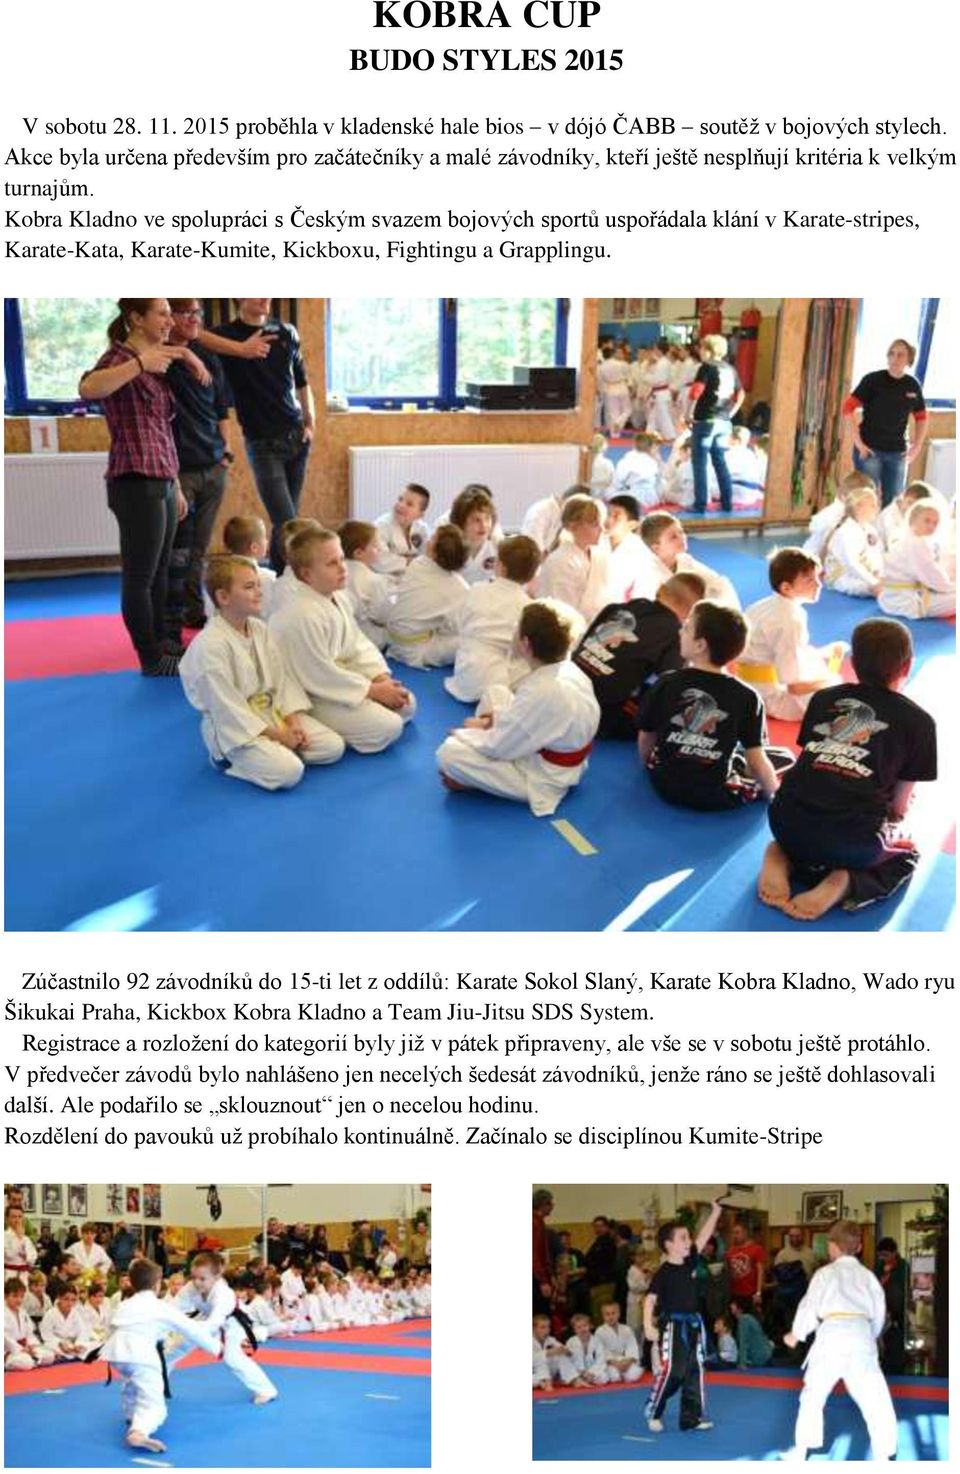 Kobra Kladno ve spolupráci s Českým svazem bojových sportů uspořádala klání v Karate-stripes, Karate-Kata, Karate-Kumite, Kickboxu, Fightingu a Grapplingu.